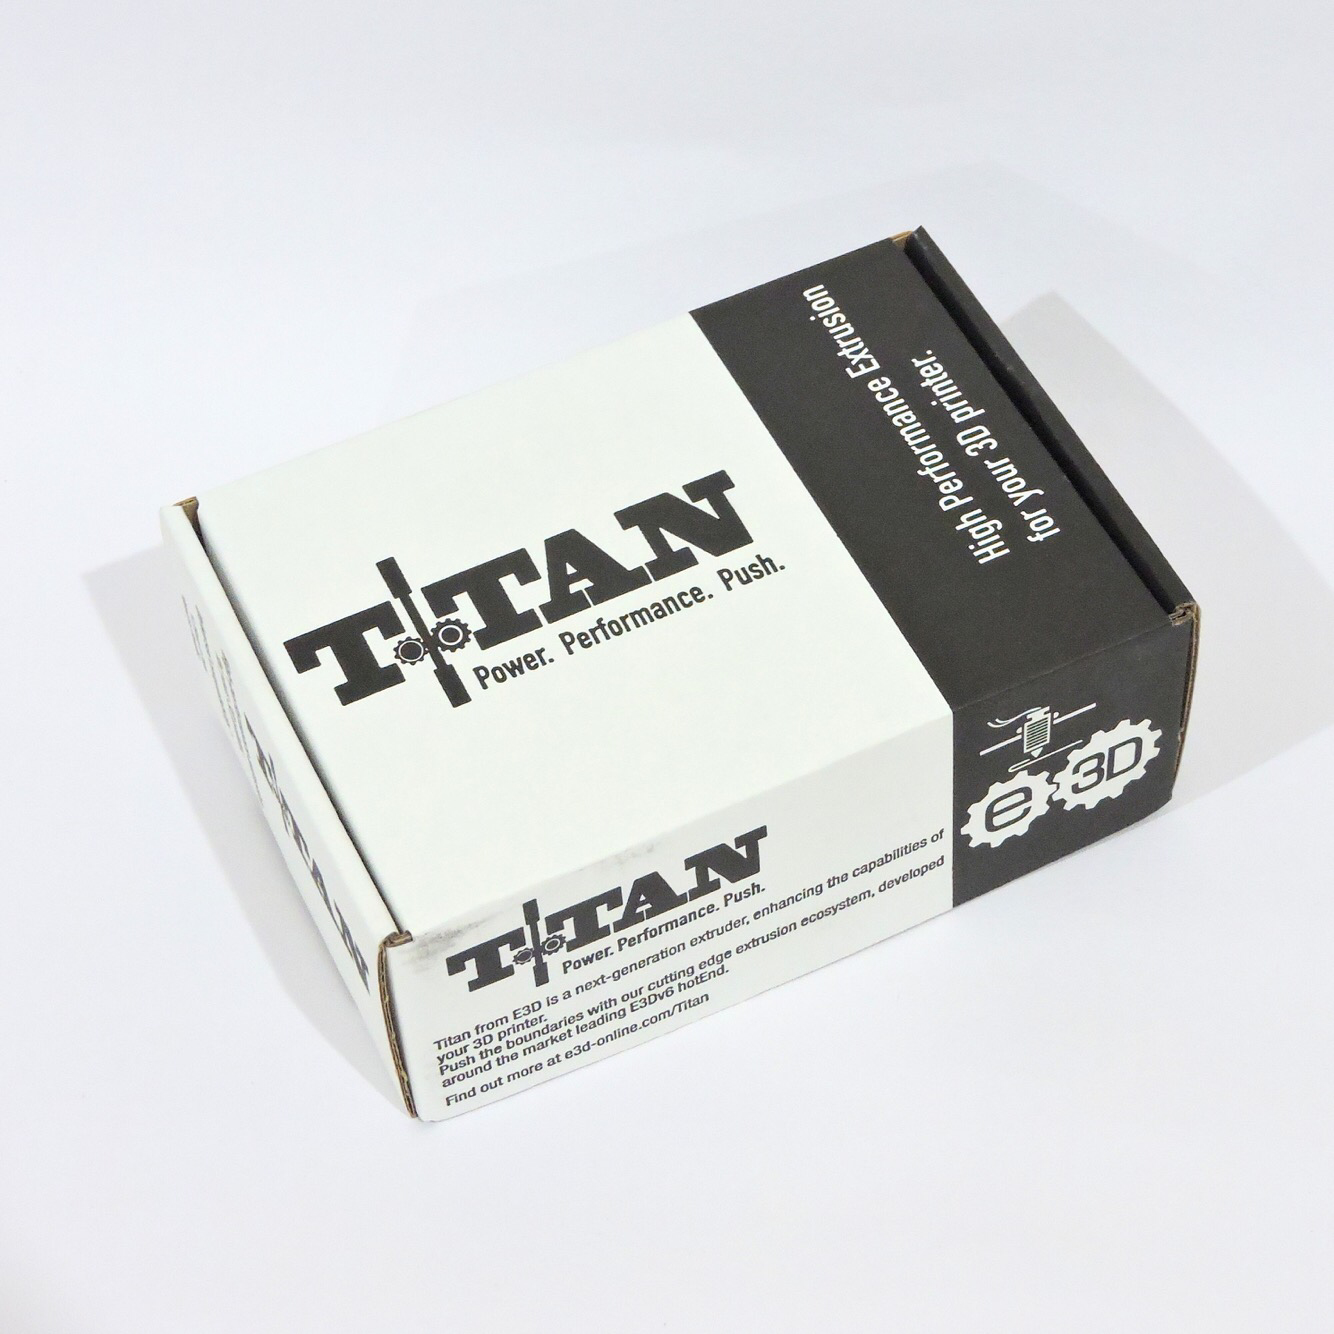 E3D E3D Titan Extruder Direct Drive 1 8 1